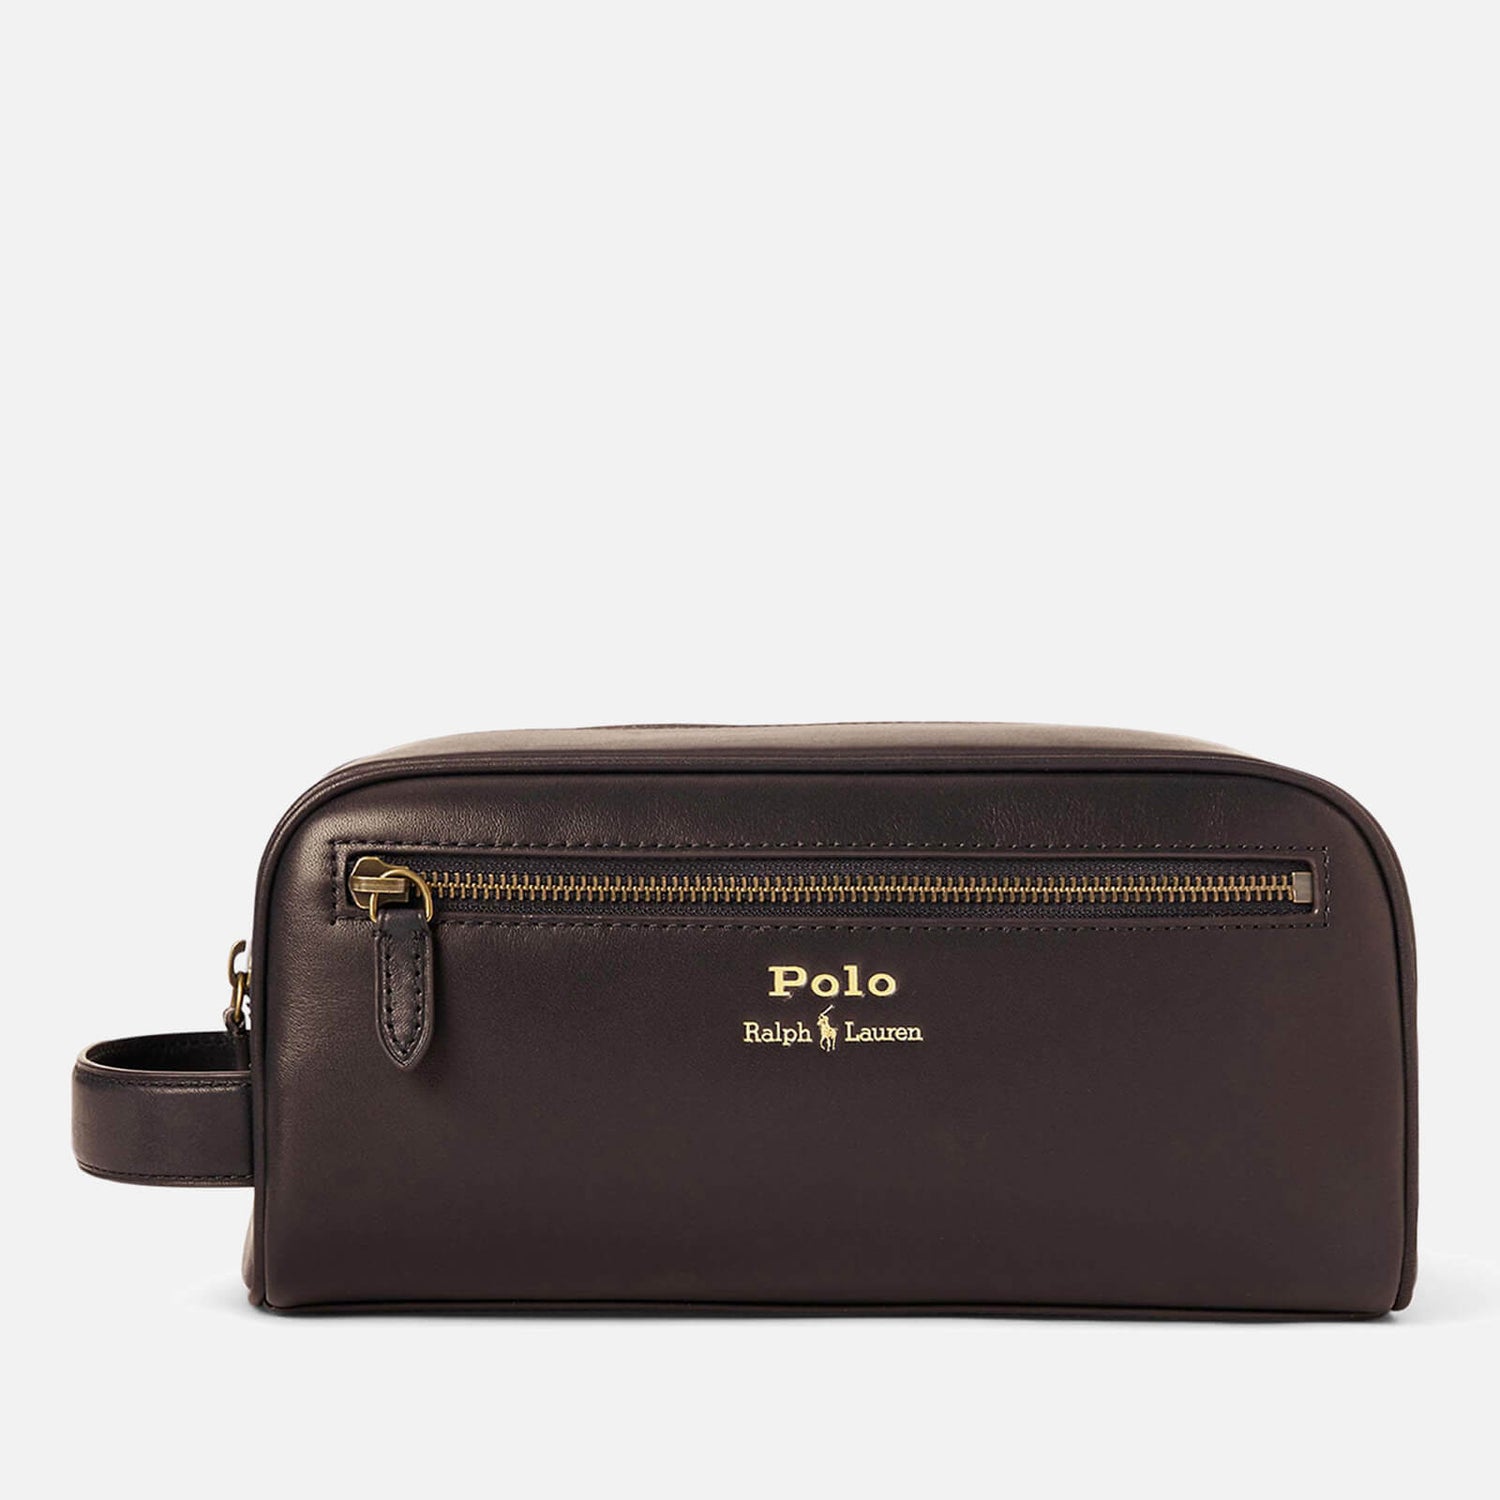 Polo Ralph Lauren Medium Leather Wash Bag